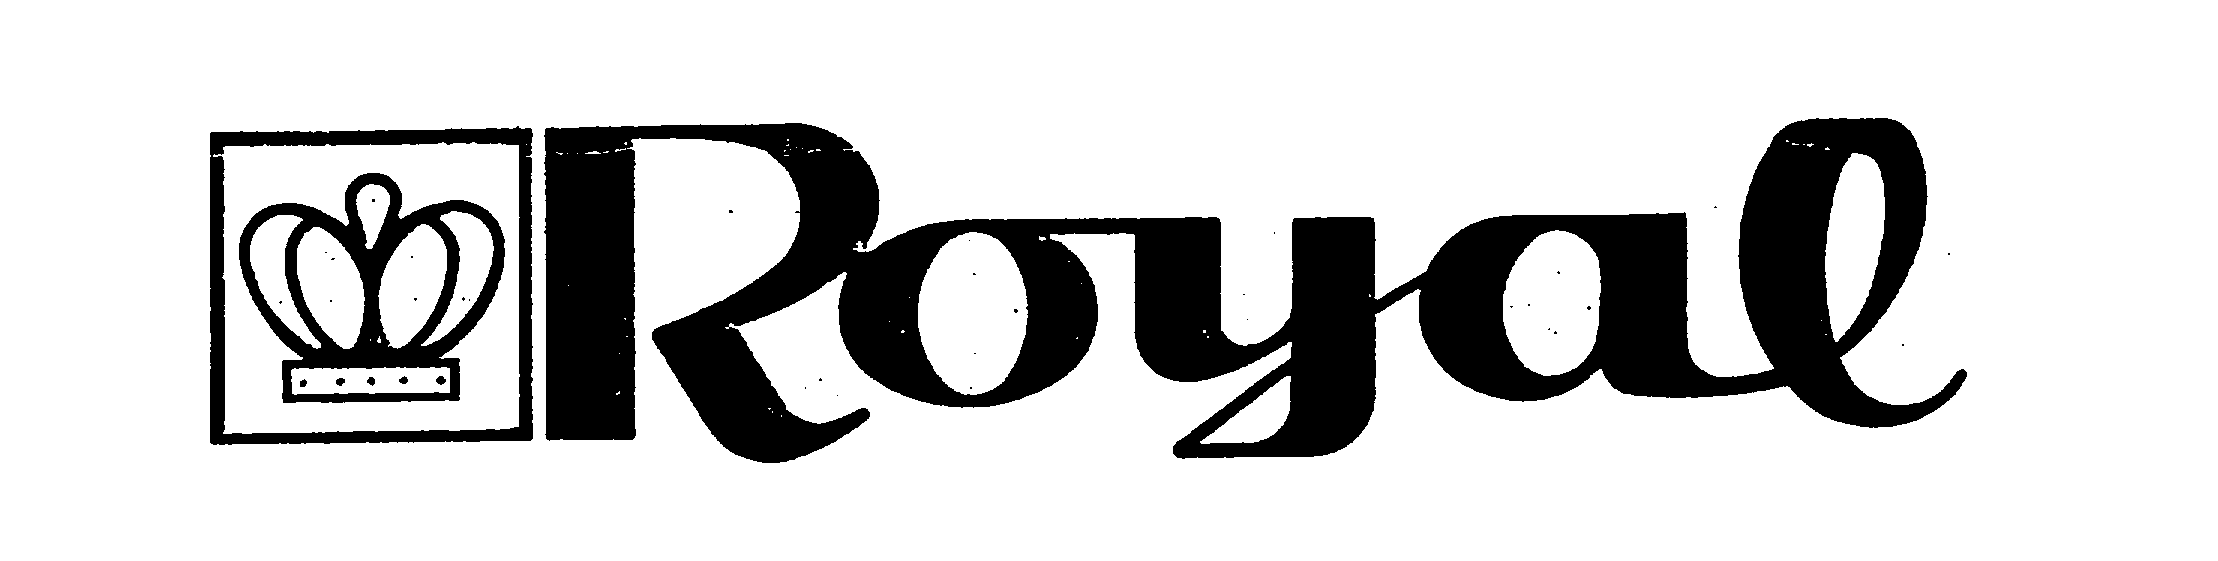 Trademark Logo ROYAL